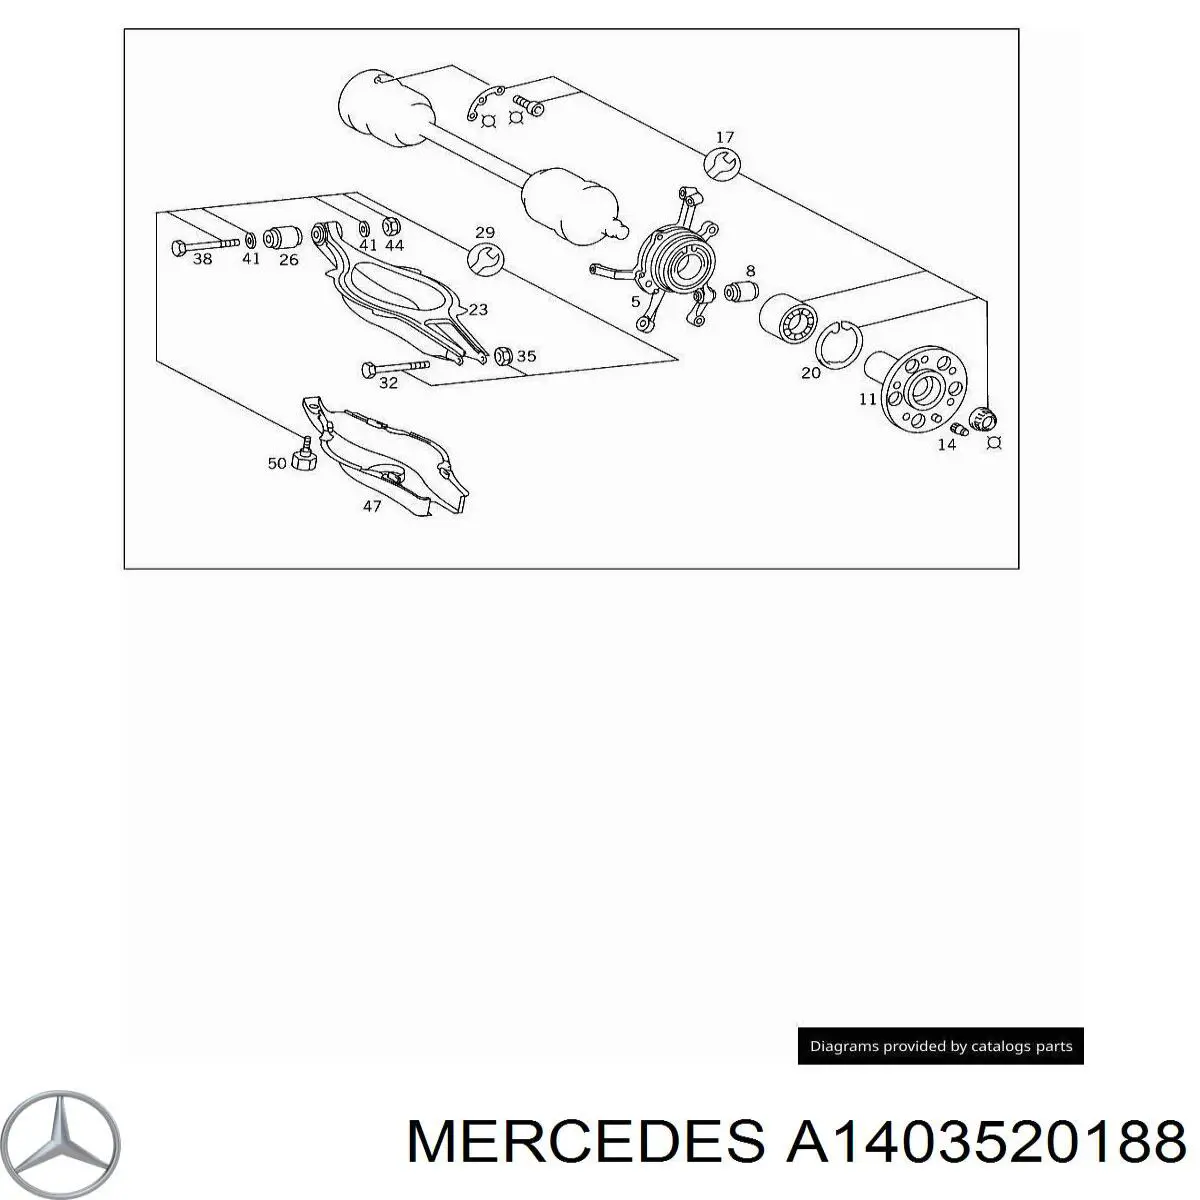 1403520188 Mercedes